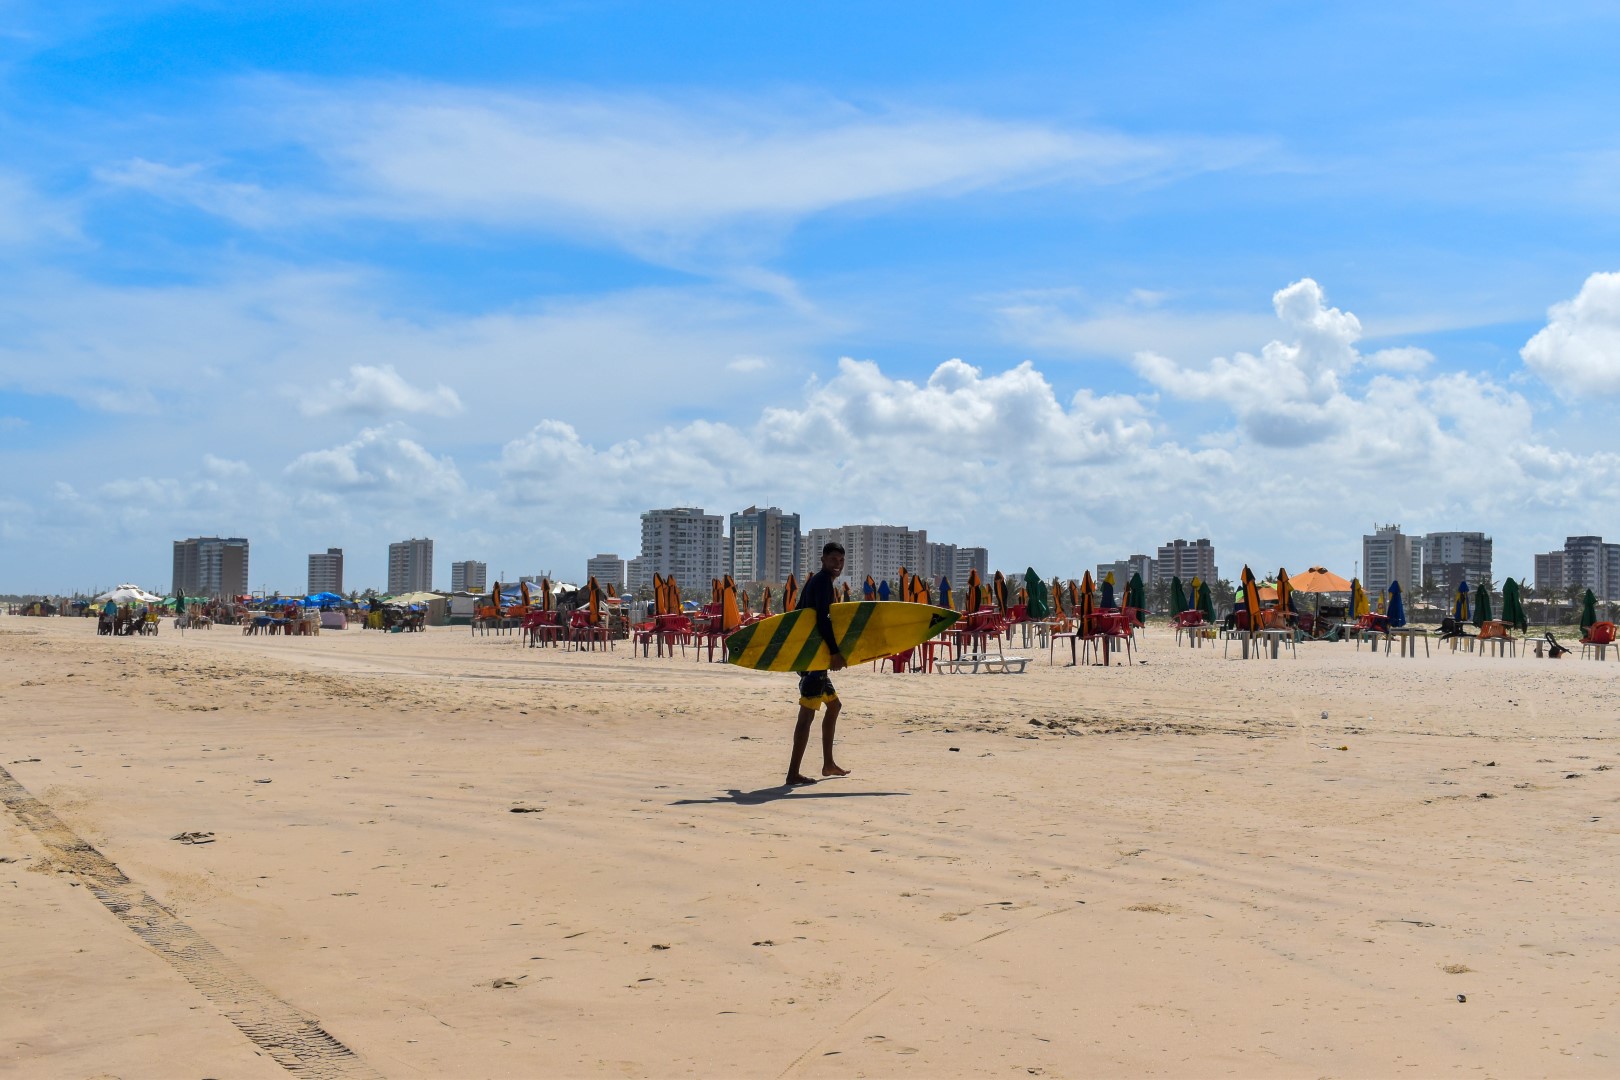 Praia de Atalaia, Aracaju - State of Sergipe